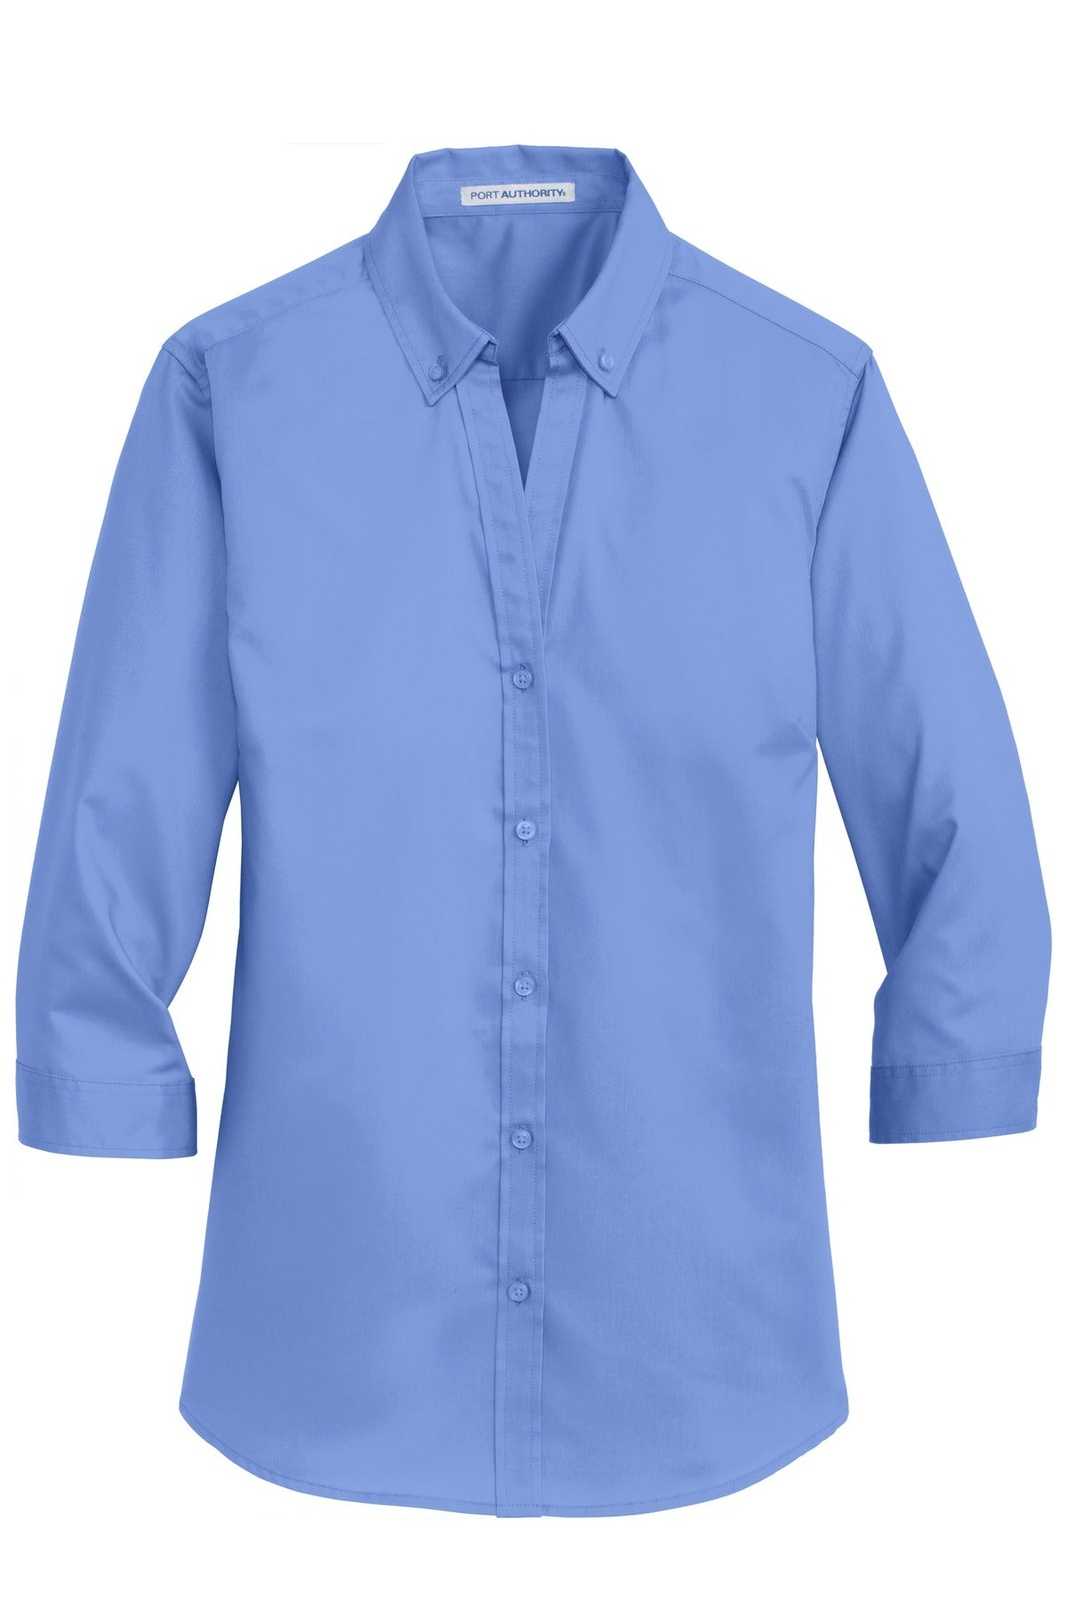 Port Authority L665 Ladies 3/4-Sleeve Superpro Twill Shirt - Ultramarine Blue - HIT a Double - 5